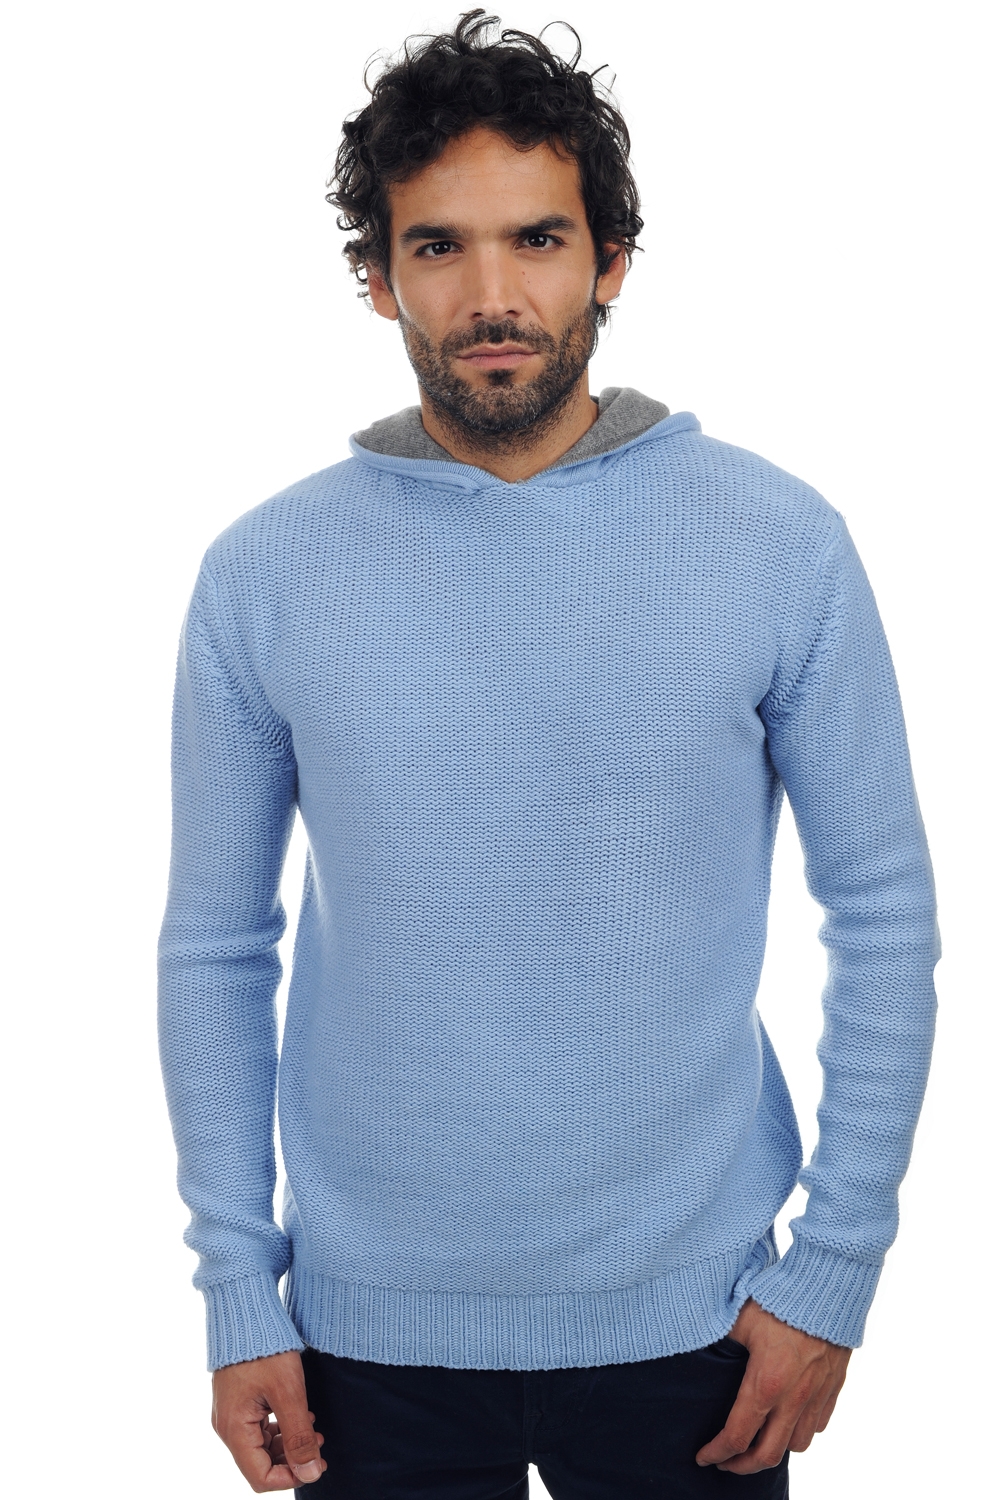 Yak men chunky sweater conor sky blue grey marl 4xl